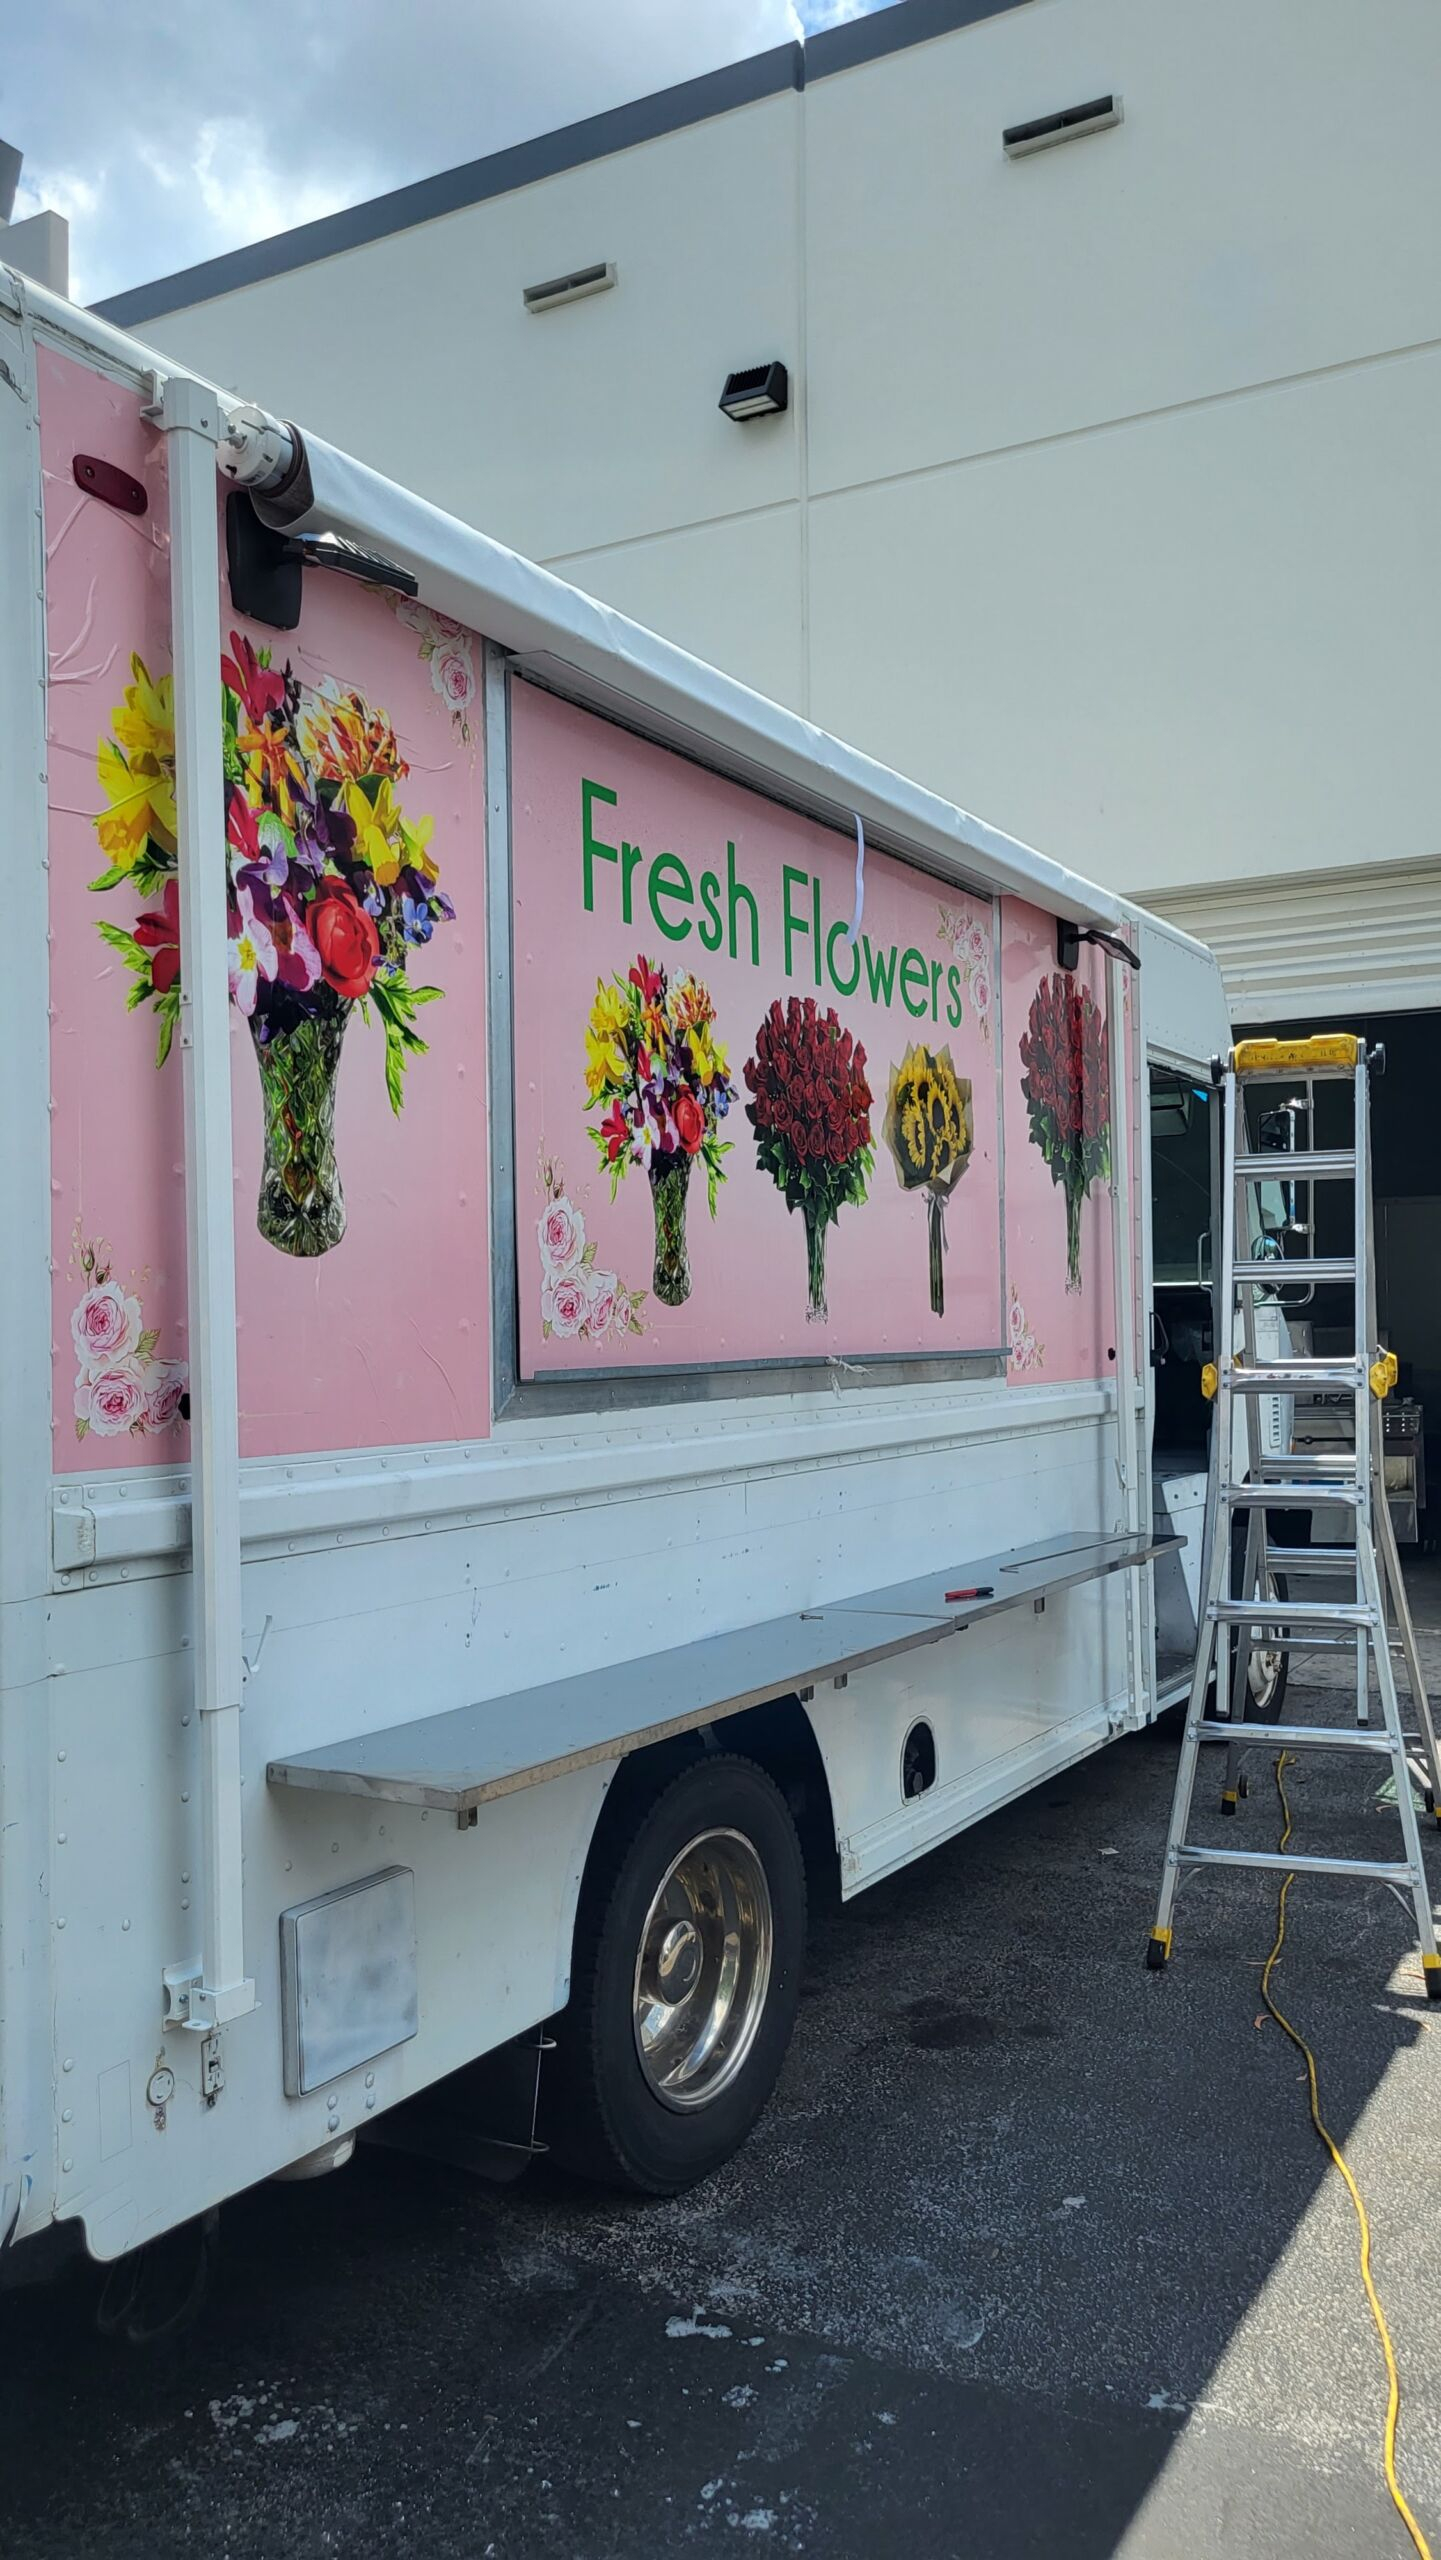 20230328 132010 scaled - Fresh Flowers Truck